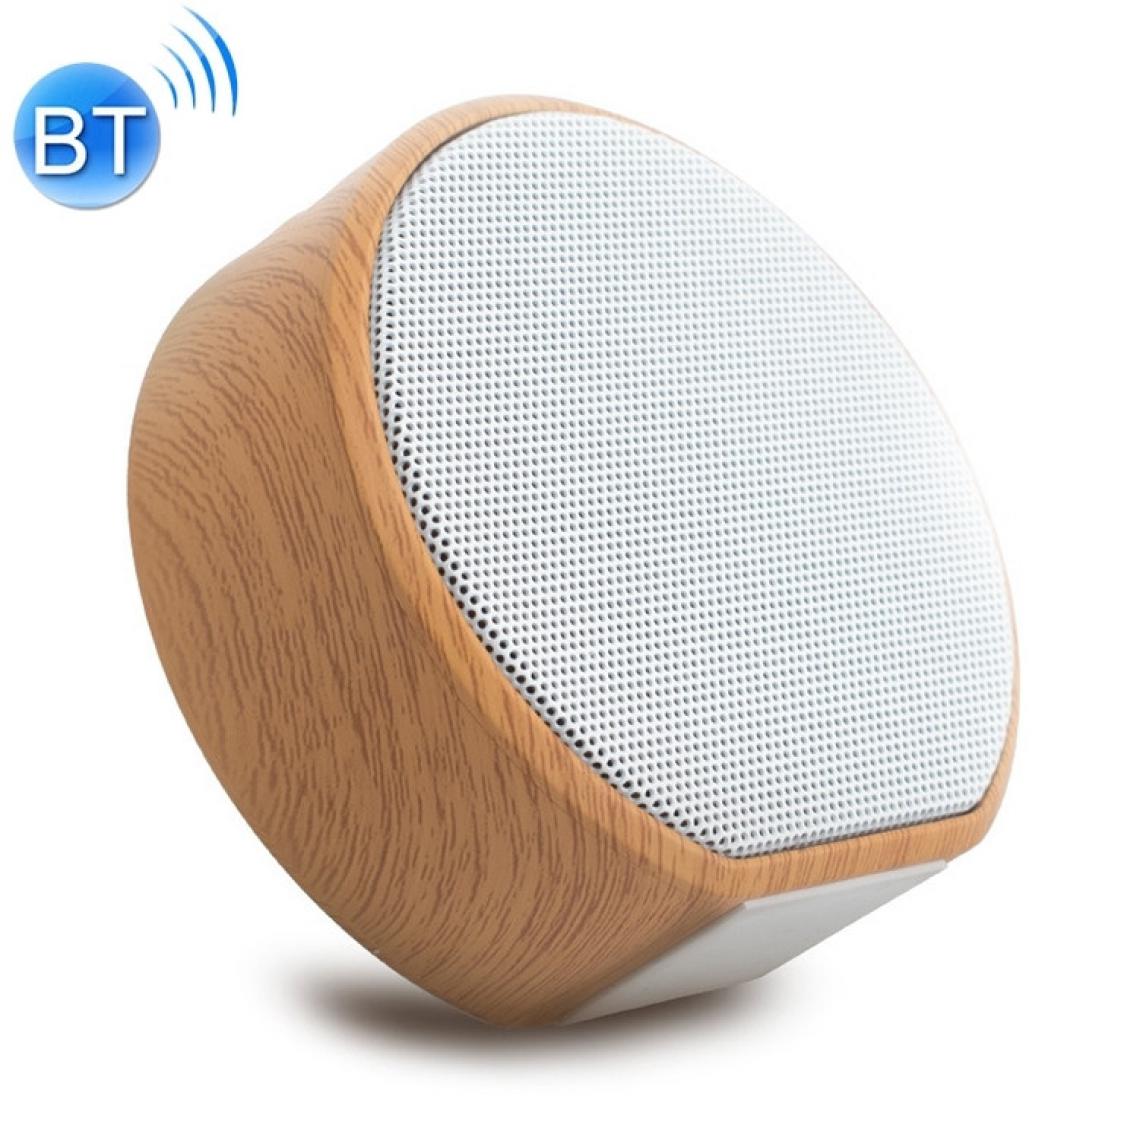 Wewoo - Enceinte Bluetooth A60 Portable Wood Grain sans fil haut-parleur Mini Subwoofer Voice Box blanc - Enceintes Hifi